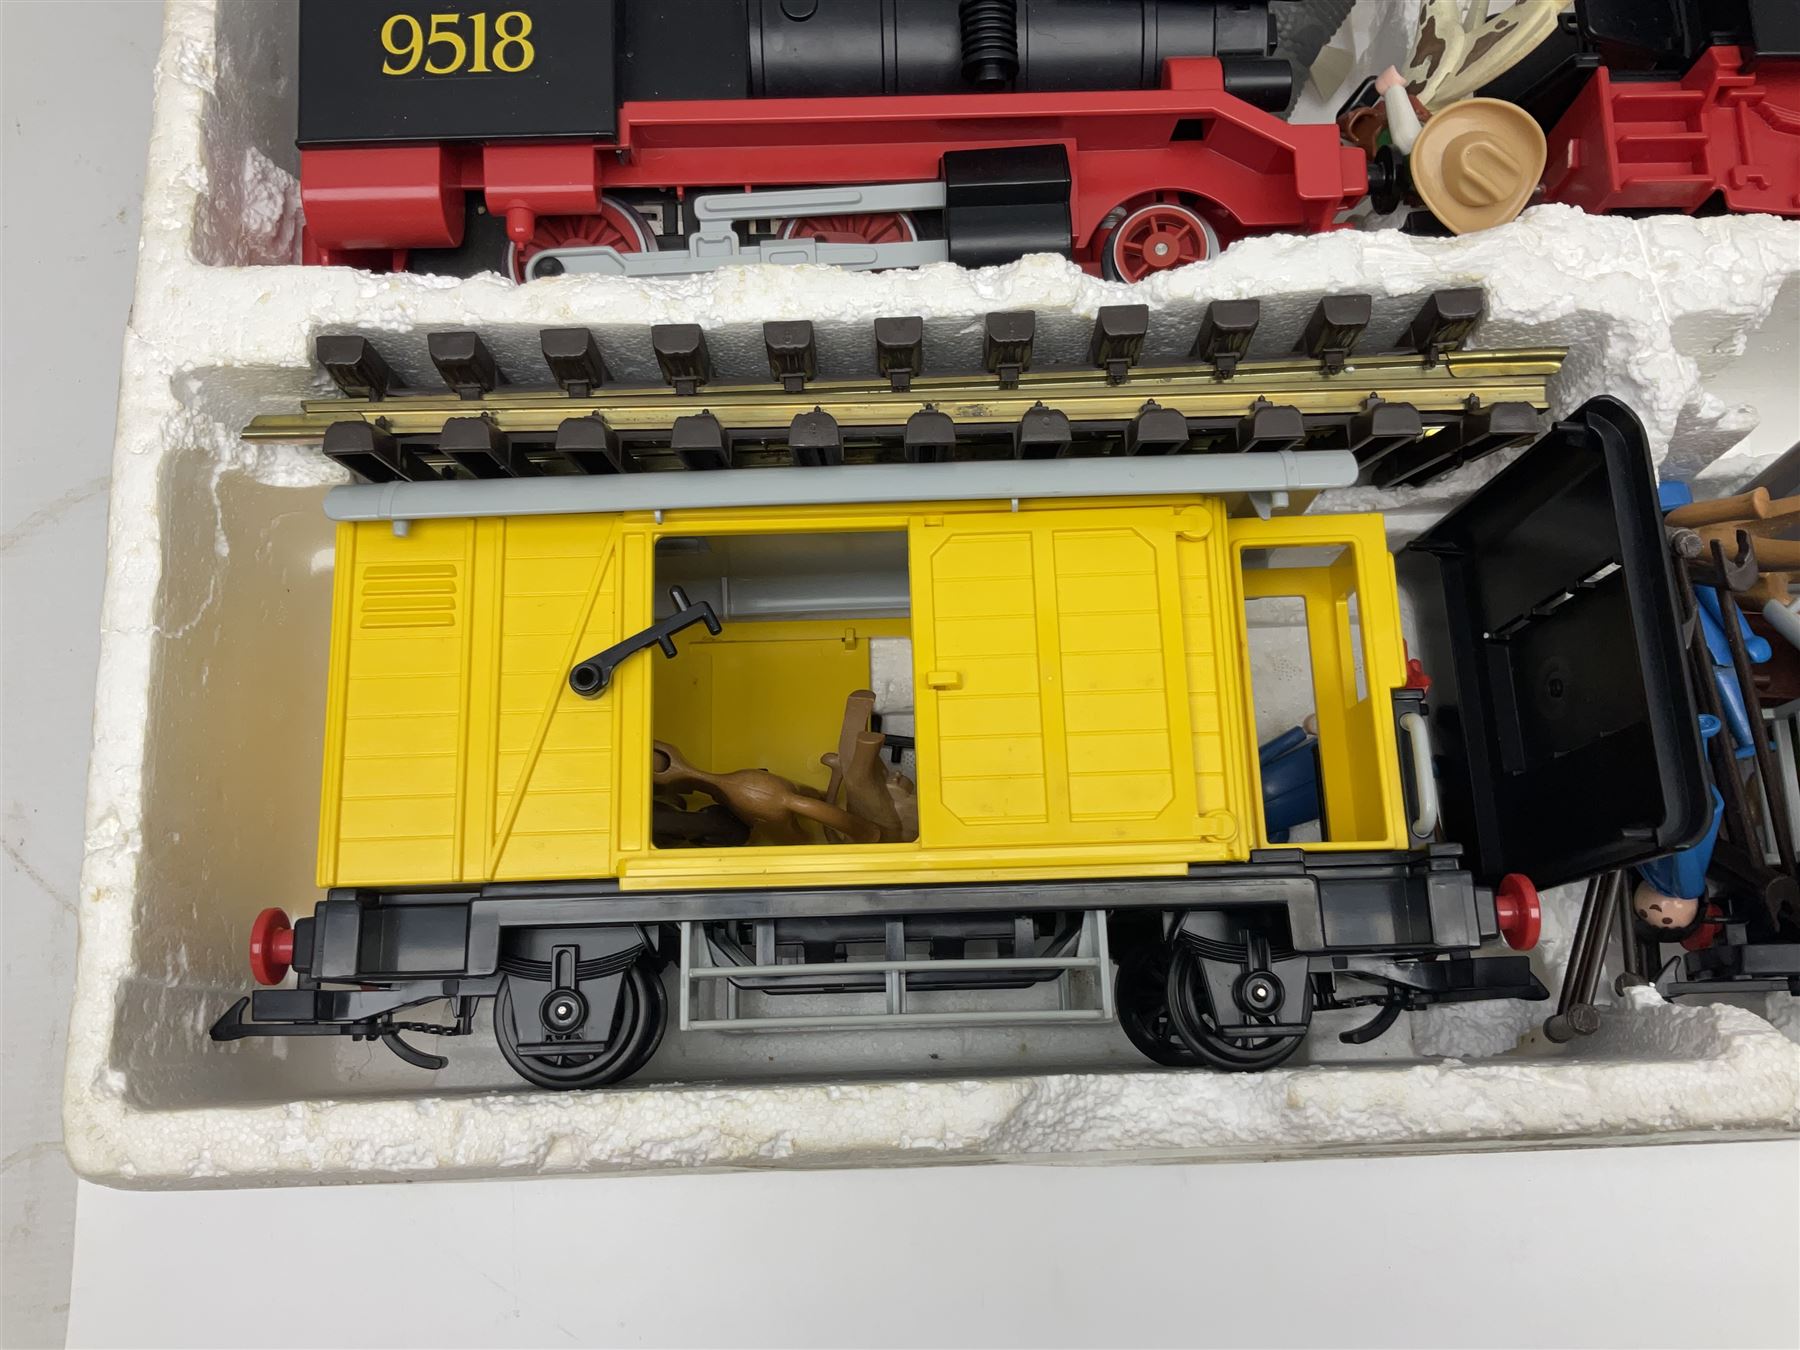 Playmobil 'G' gauge - 4031 Pennsylvania Railroad train set with 2